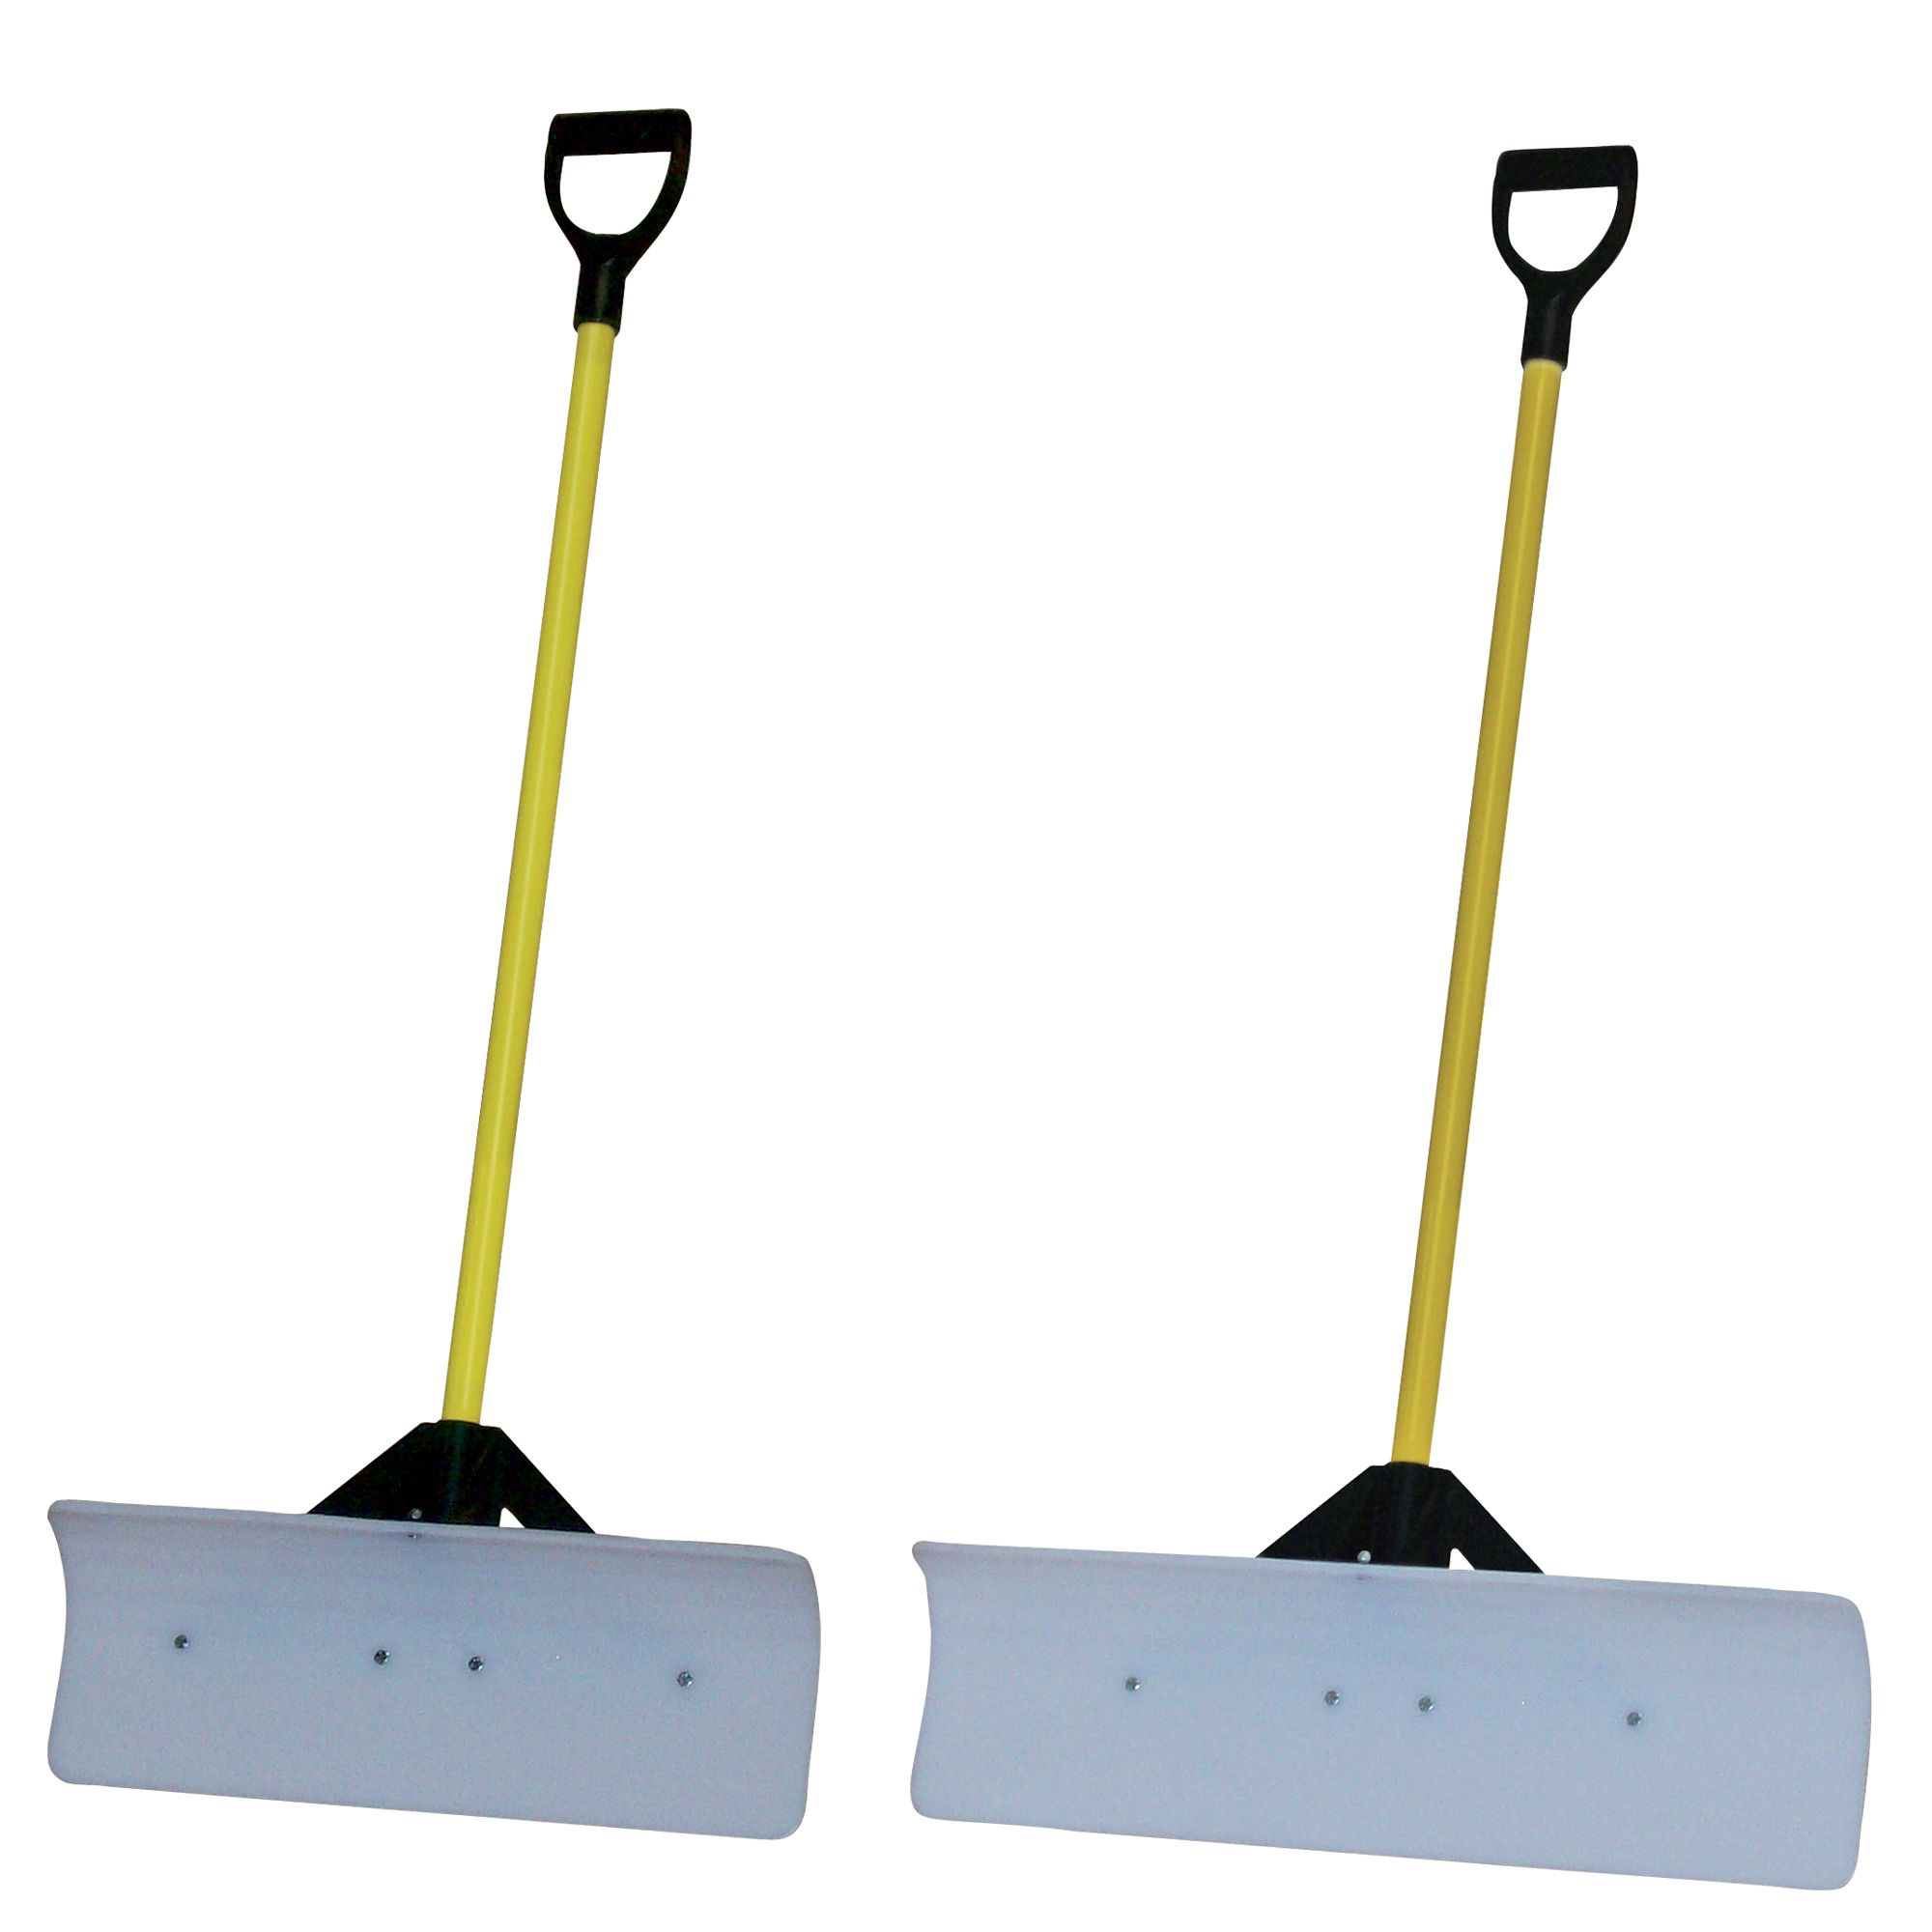 The 30 Snow Plow Shovel Pusher 50530 with D-Grip Style Fiberglass Handle 